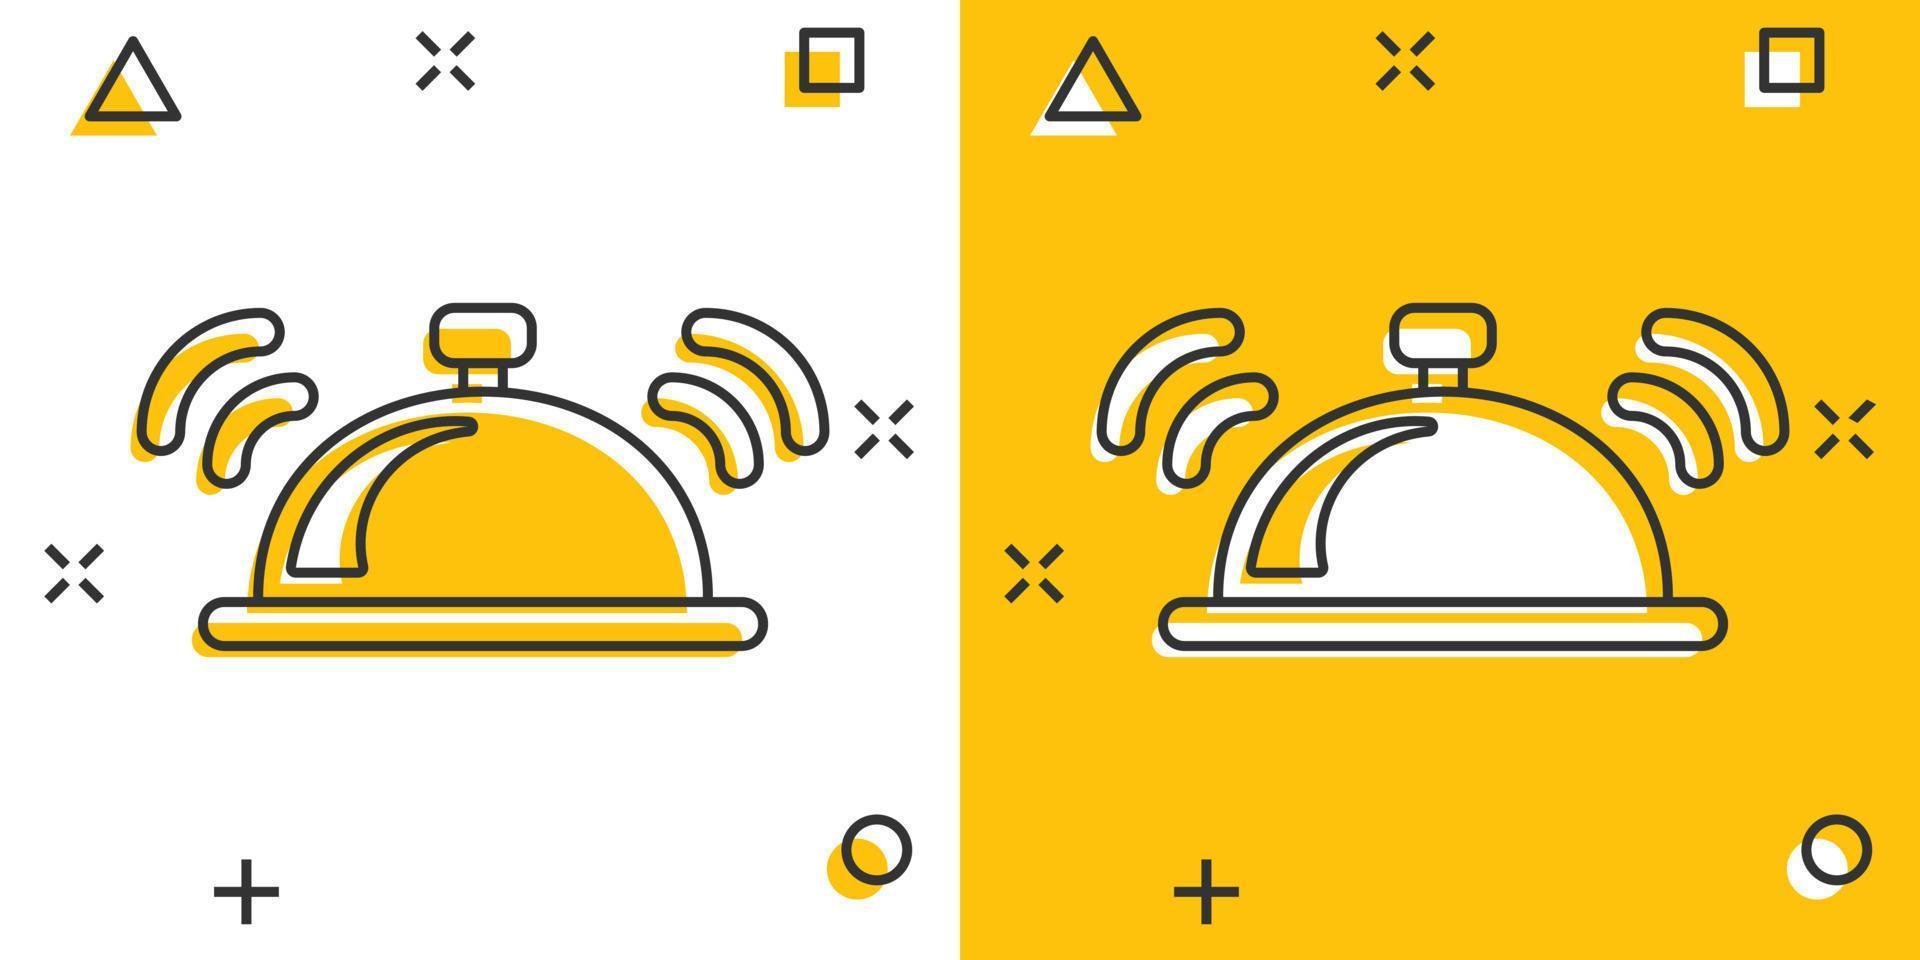 Vektor-Cartoon-Glockensymbol im Comic-Stil. Piktogramm für das Konzept der Alarmglocke. handbell Business-Splash-Effekt-Konzept. vektor